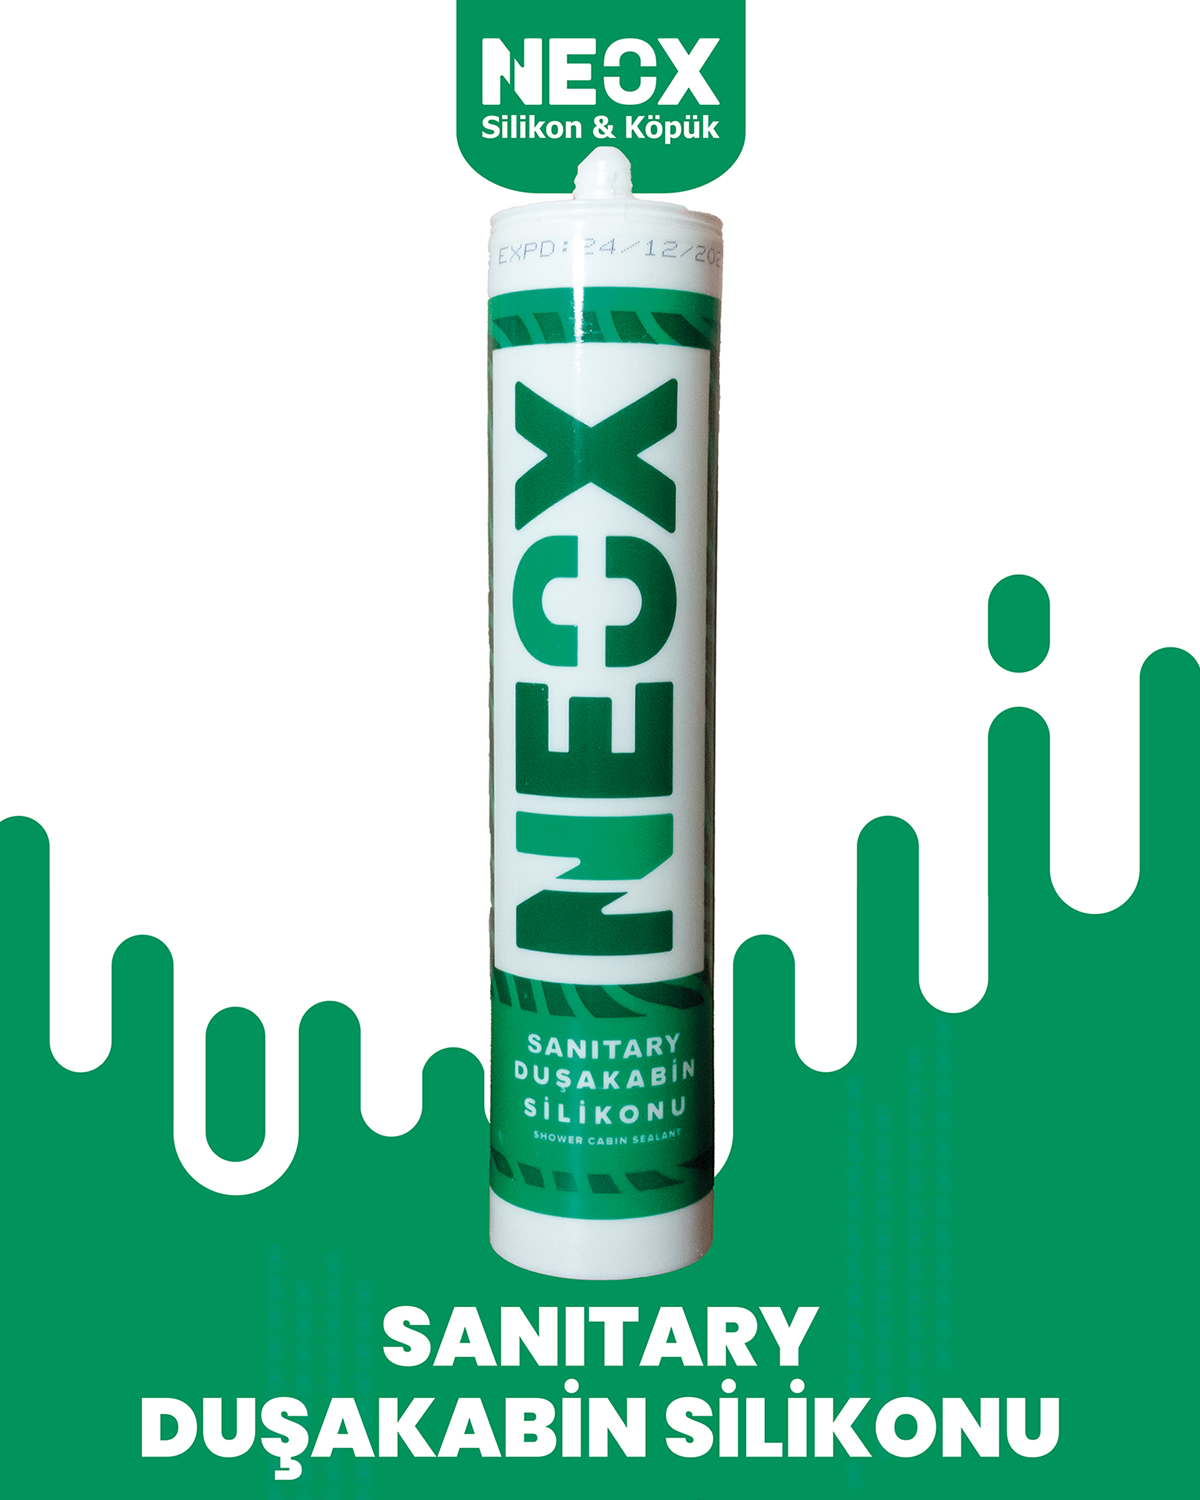 Altaryapı Neox Premier Duşakabin Silikonu Sanitary 310 ml